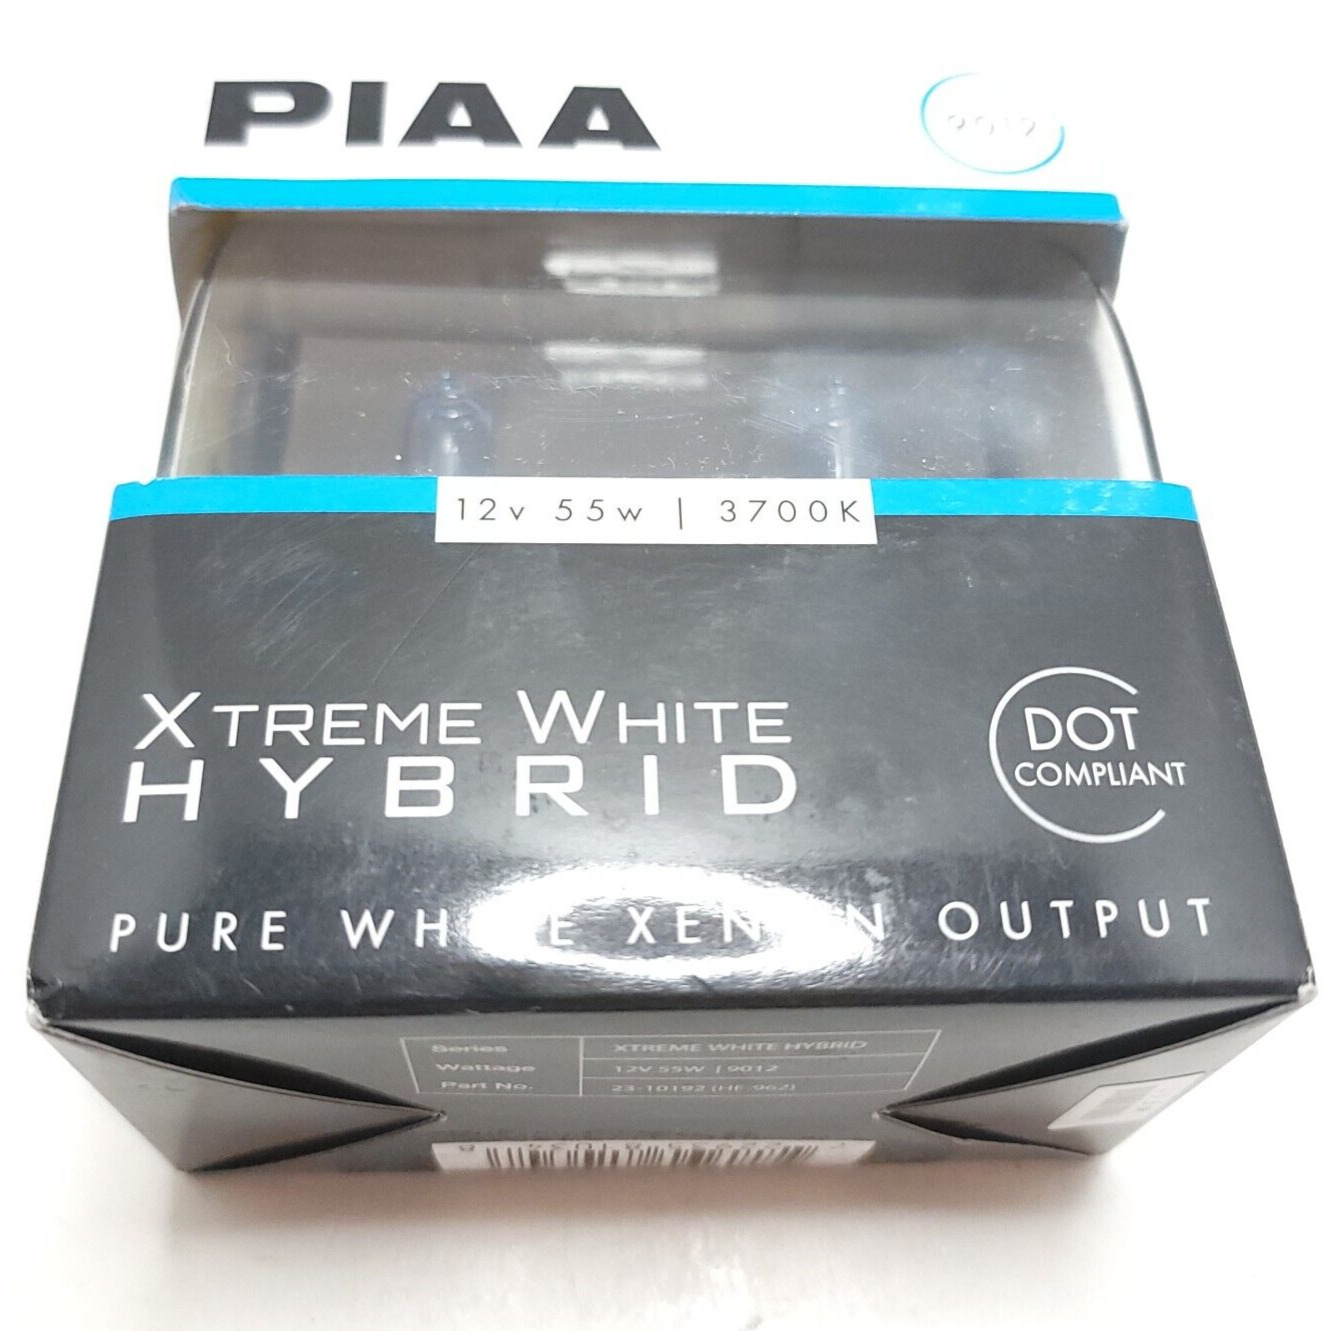 PIAA 2310192 9012 Xtreme White Hybrid Headlight Twin Pack 3700K